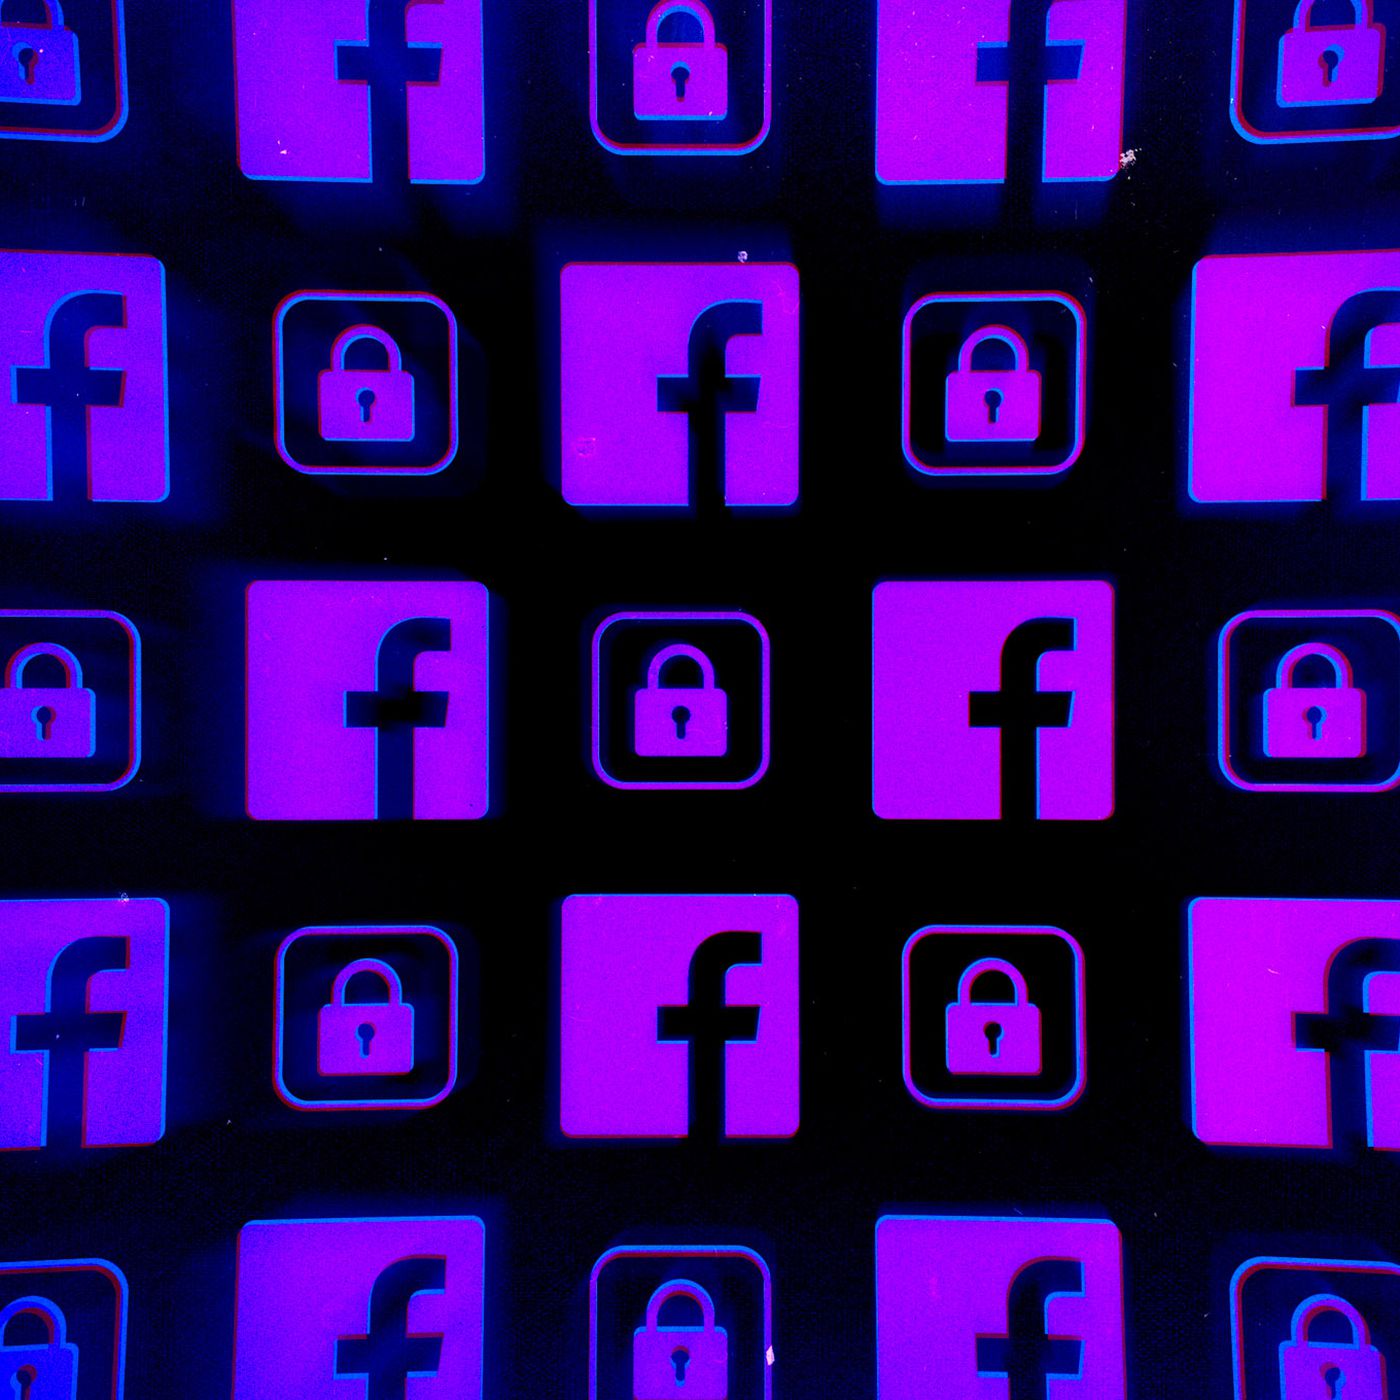 Nέα εργαλεία προστασίας απορρήτου έρχονται στο Facebook